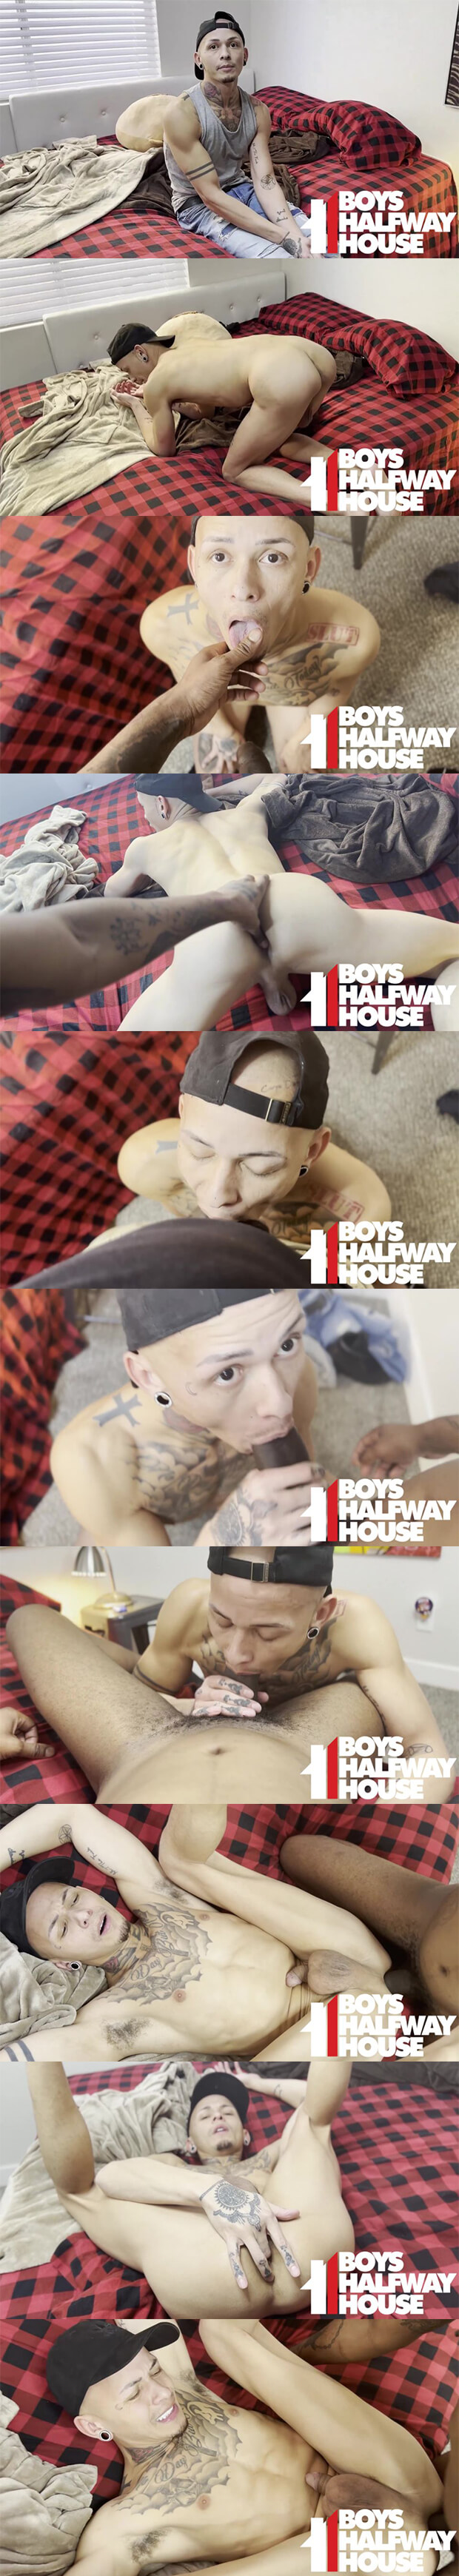 Boys Halfway House | Joseph Banks: Doin' Good